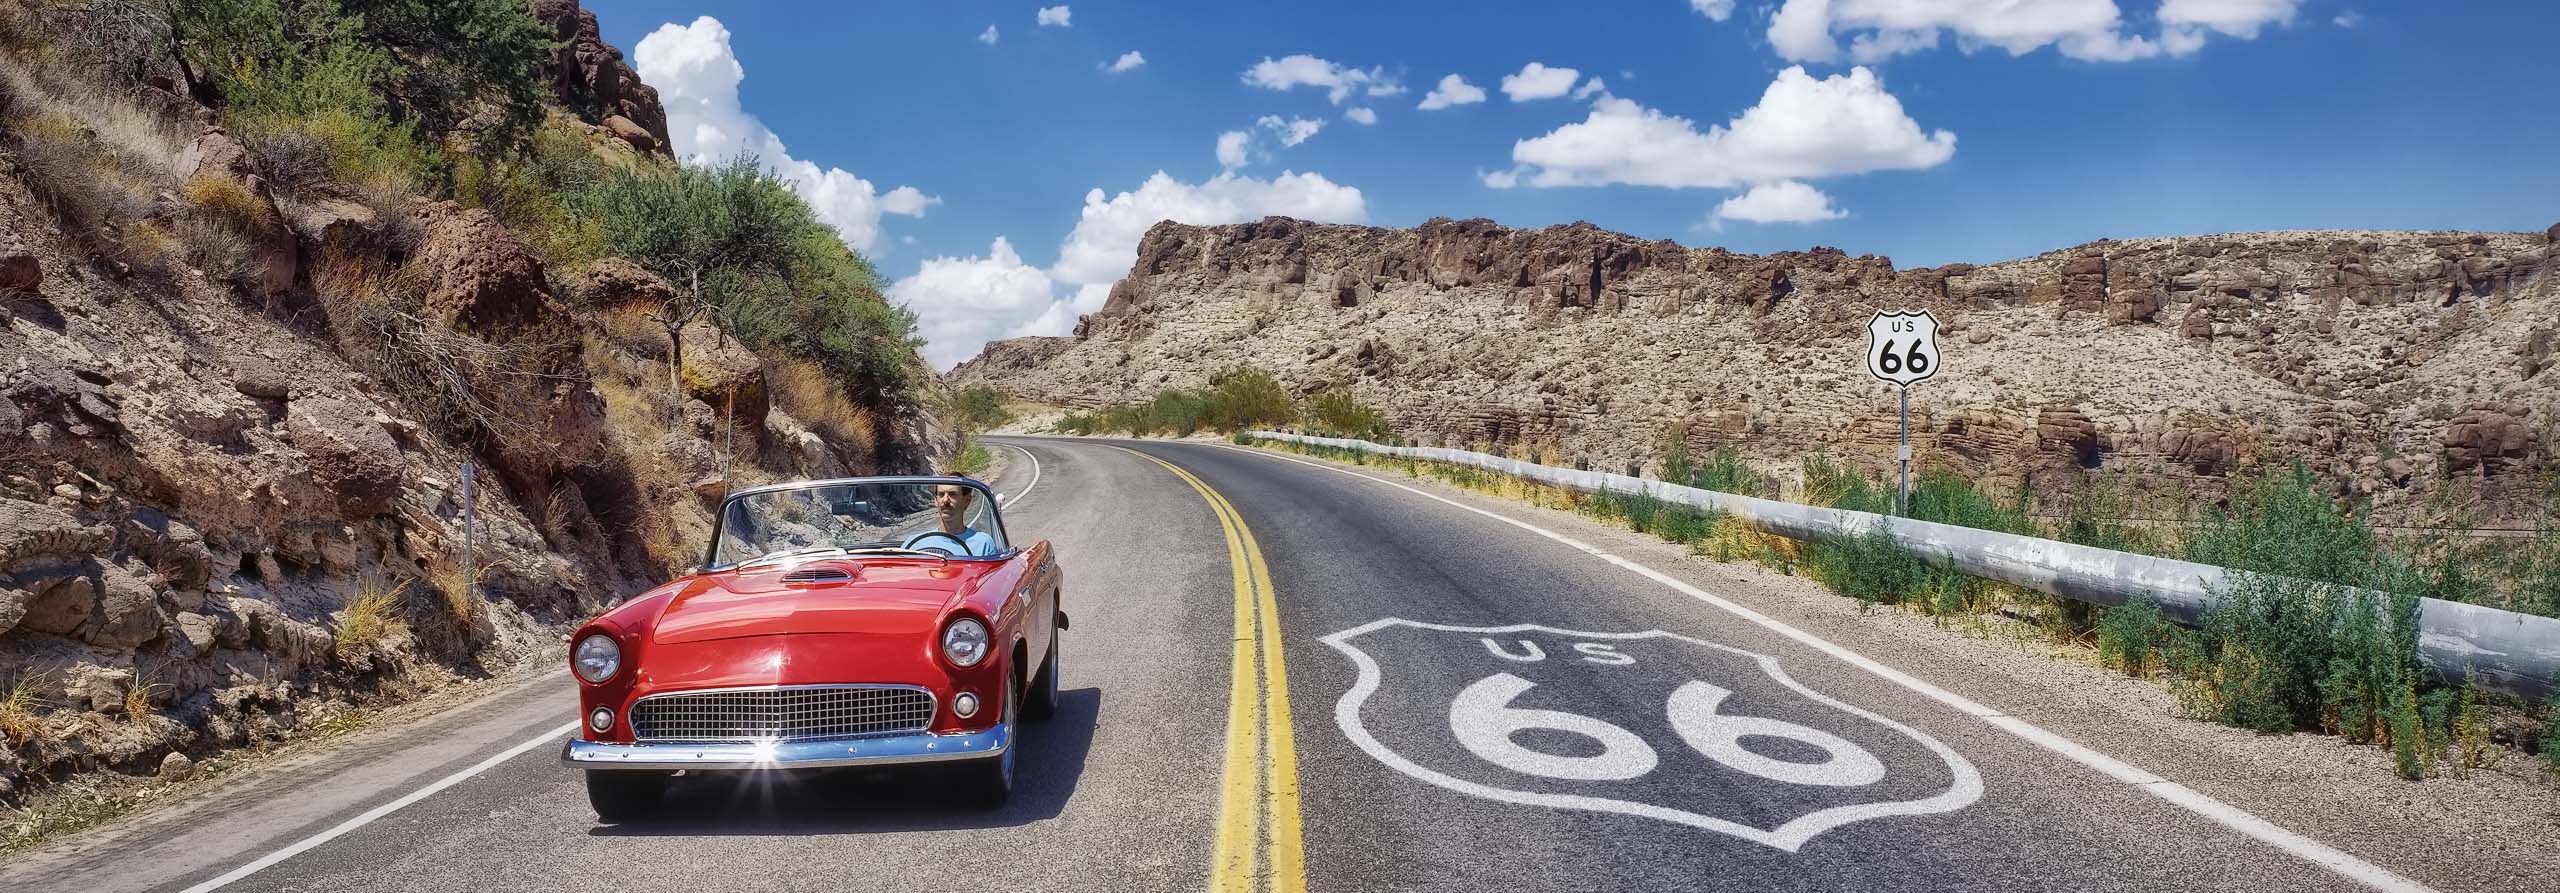   Ford Thunderbird, Route 66 near Kingman, Arizona, USA (tbirdApf)